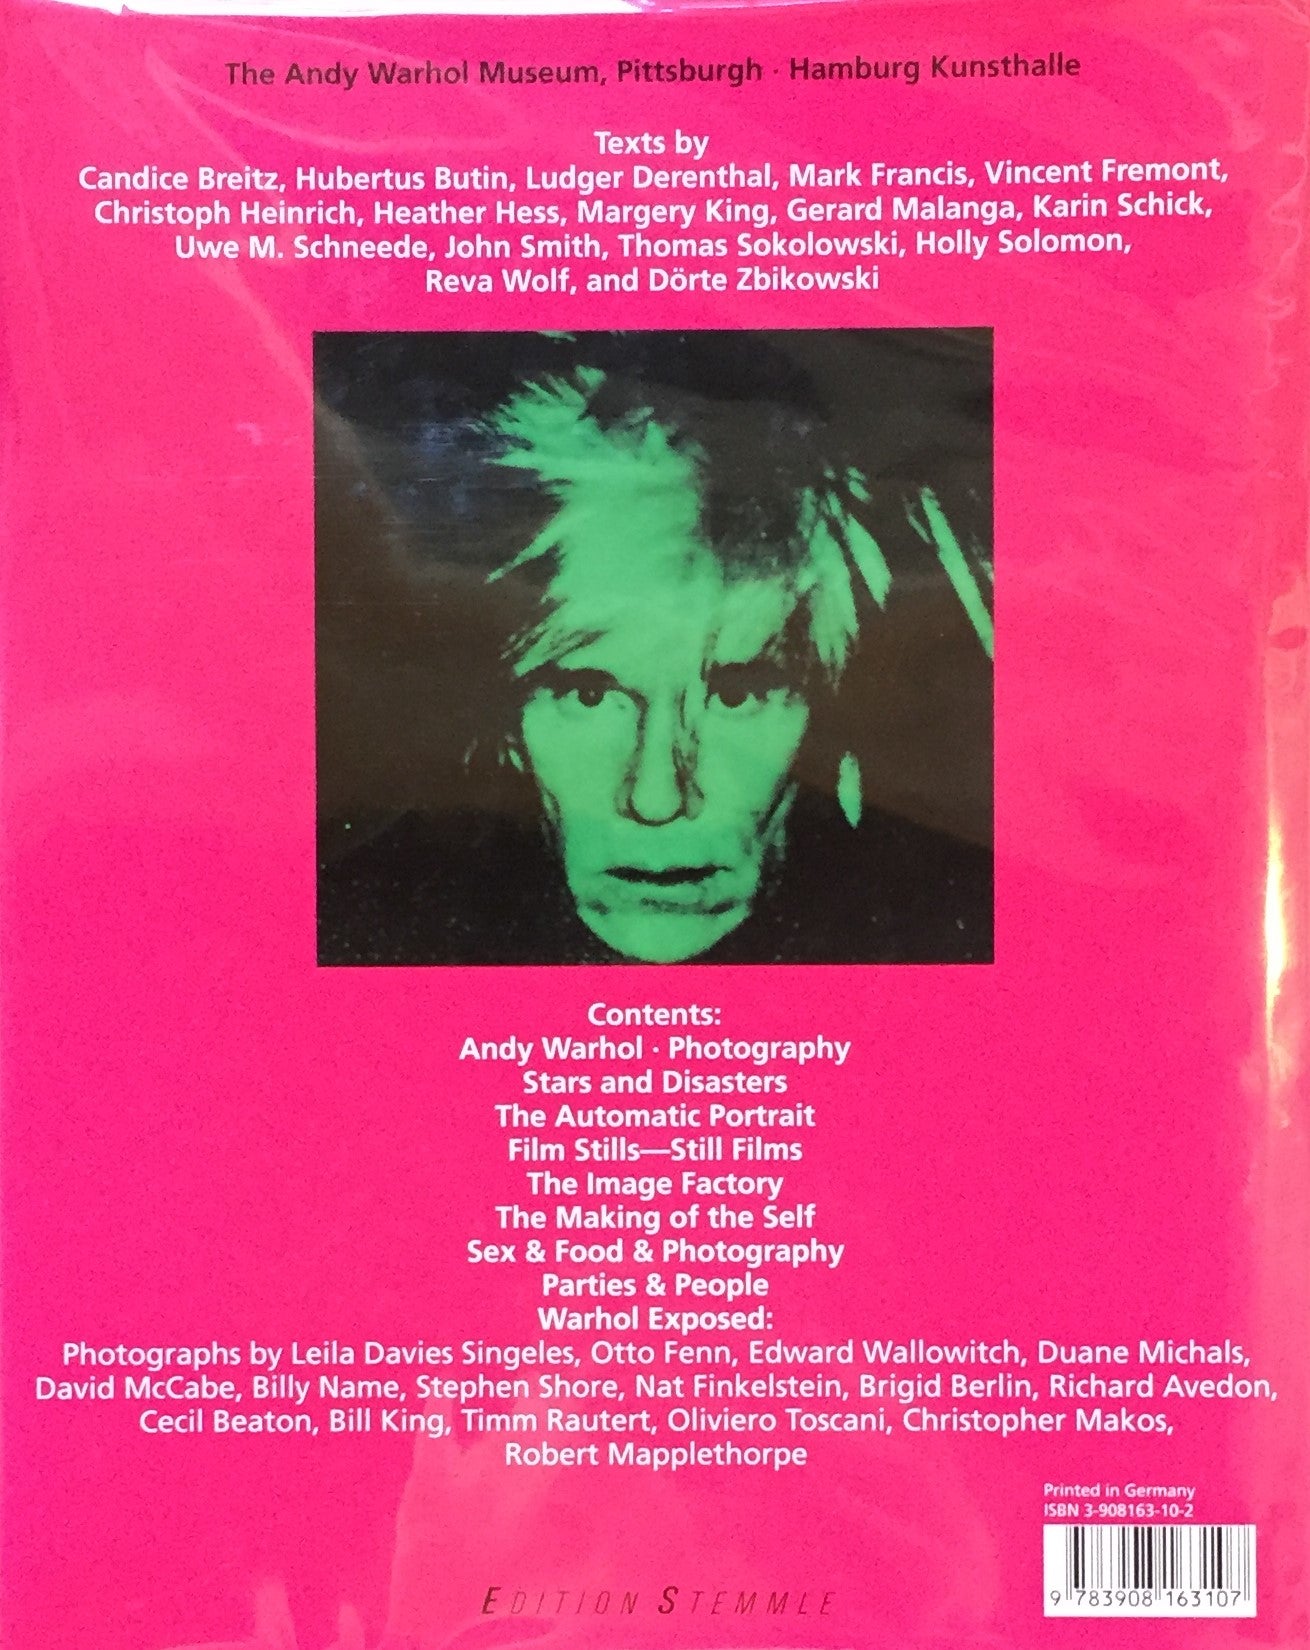 Andy Warhol Photography アンディ・ウォーホル写真集 – smokebooks shop